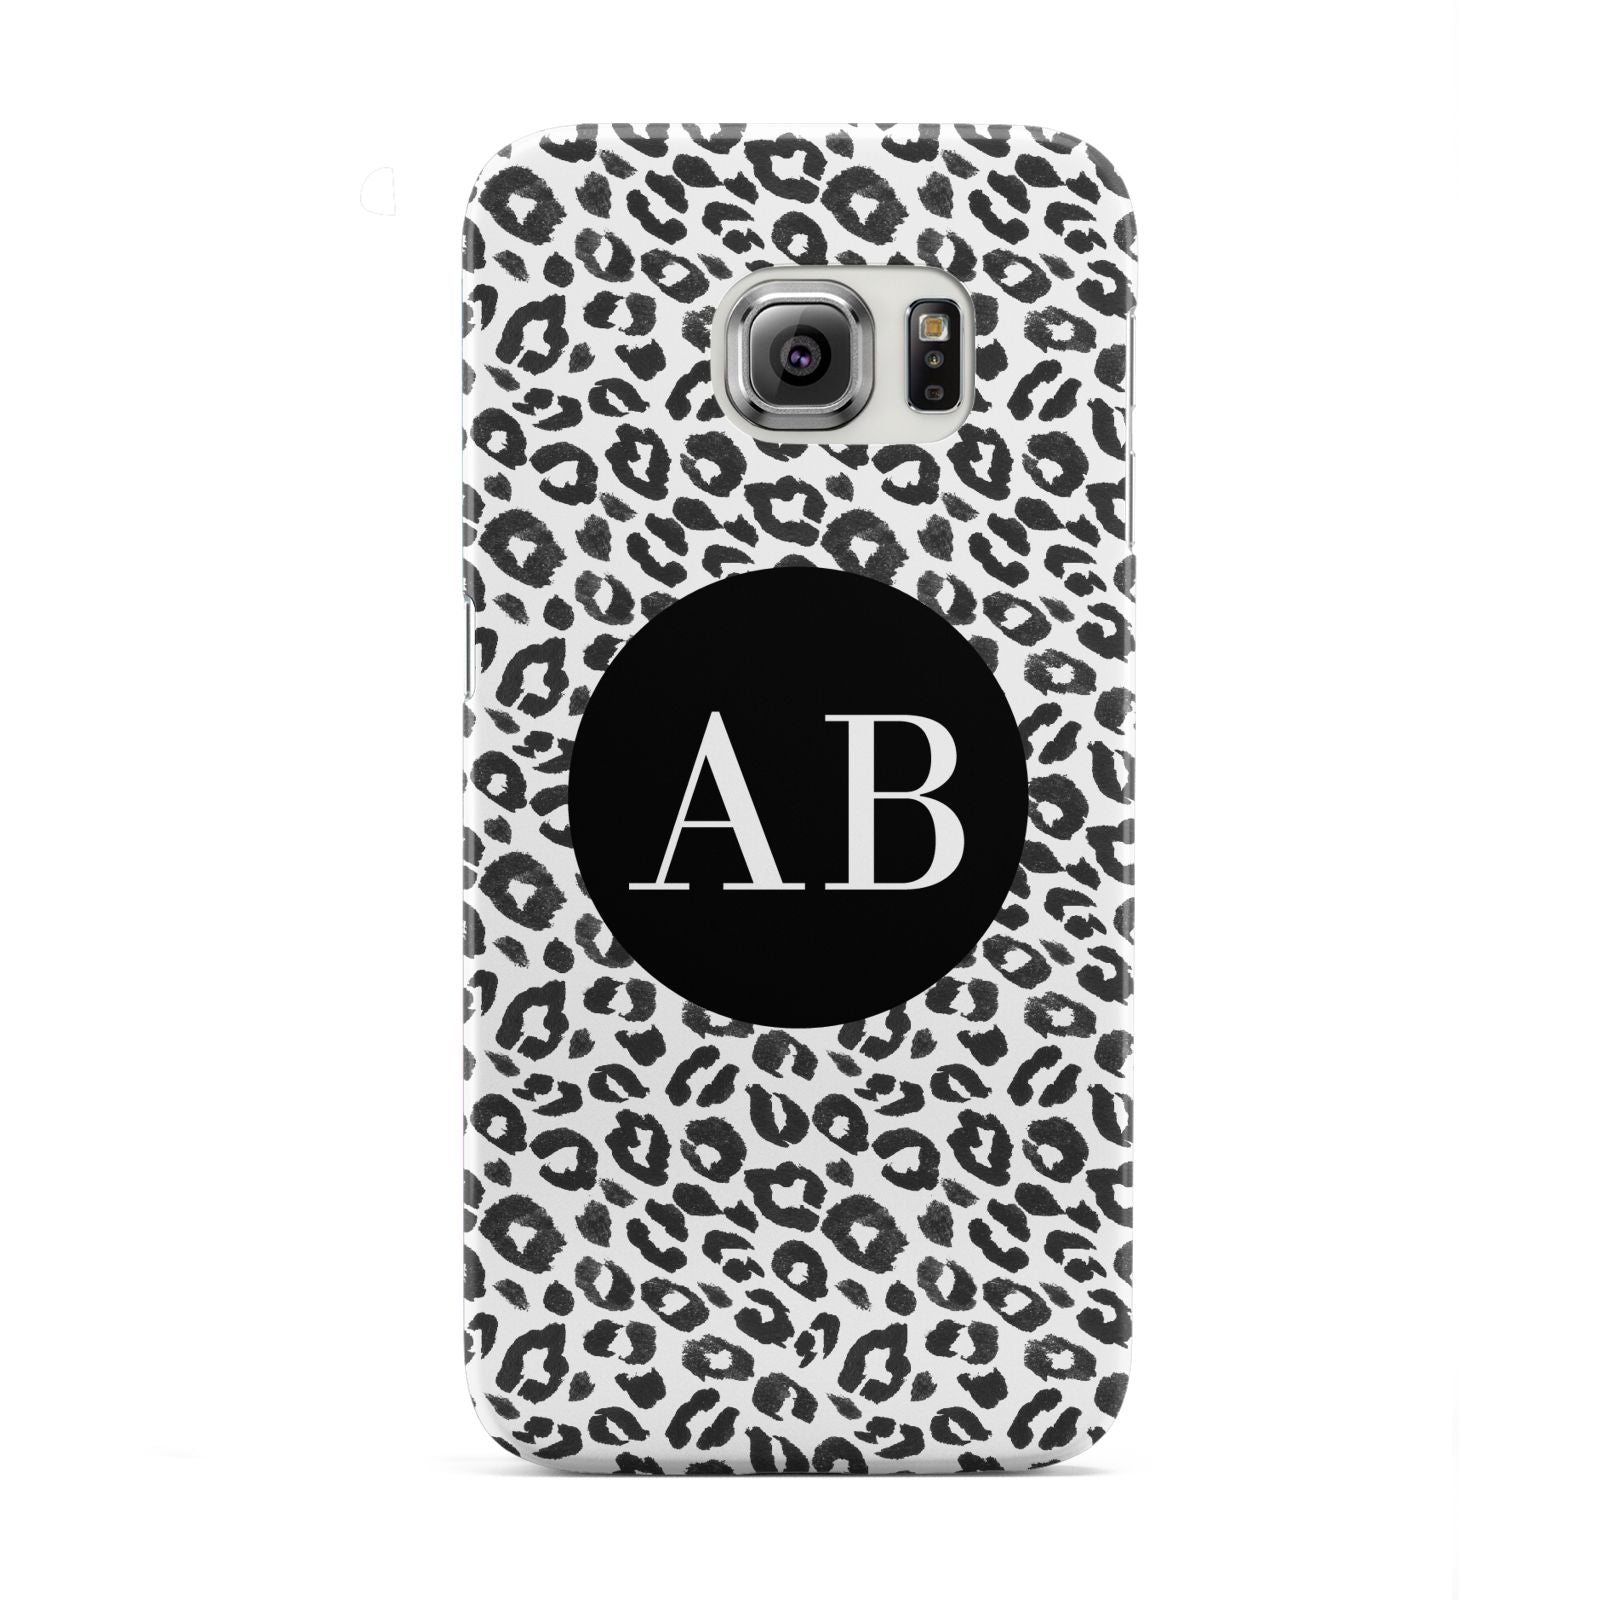 Leopard Print Black and White Samsung Galaxy S6 Edge Case